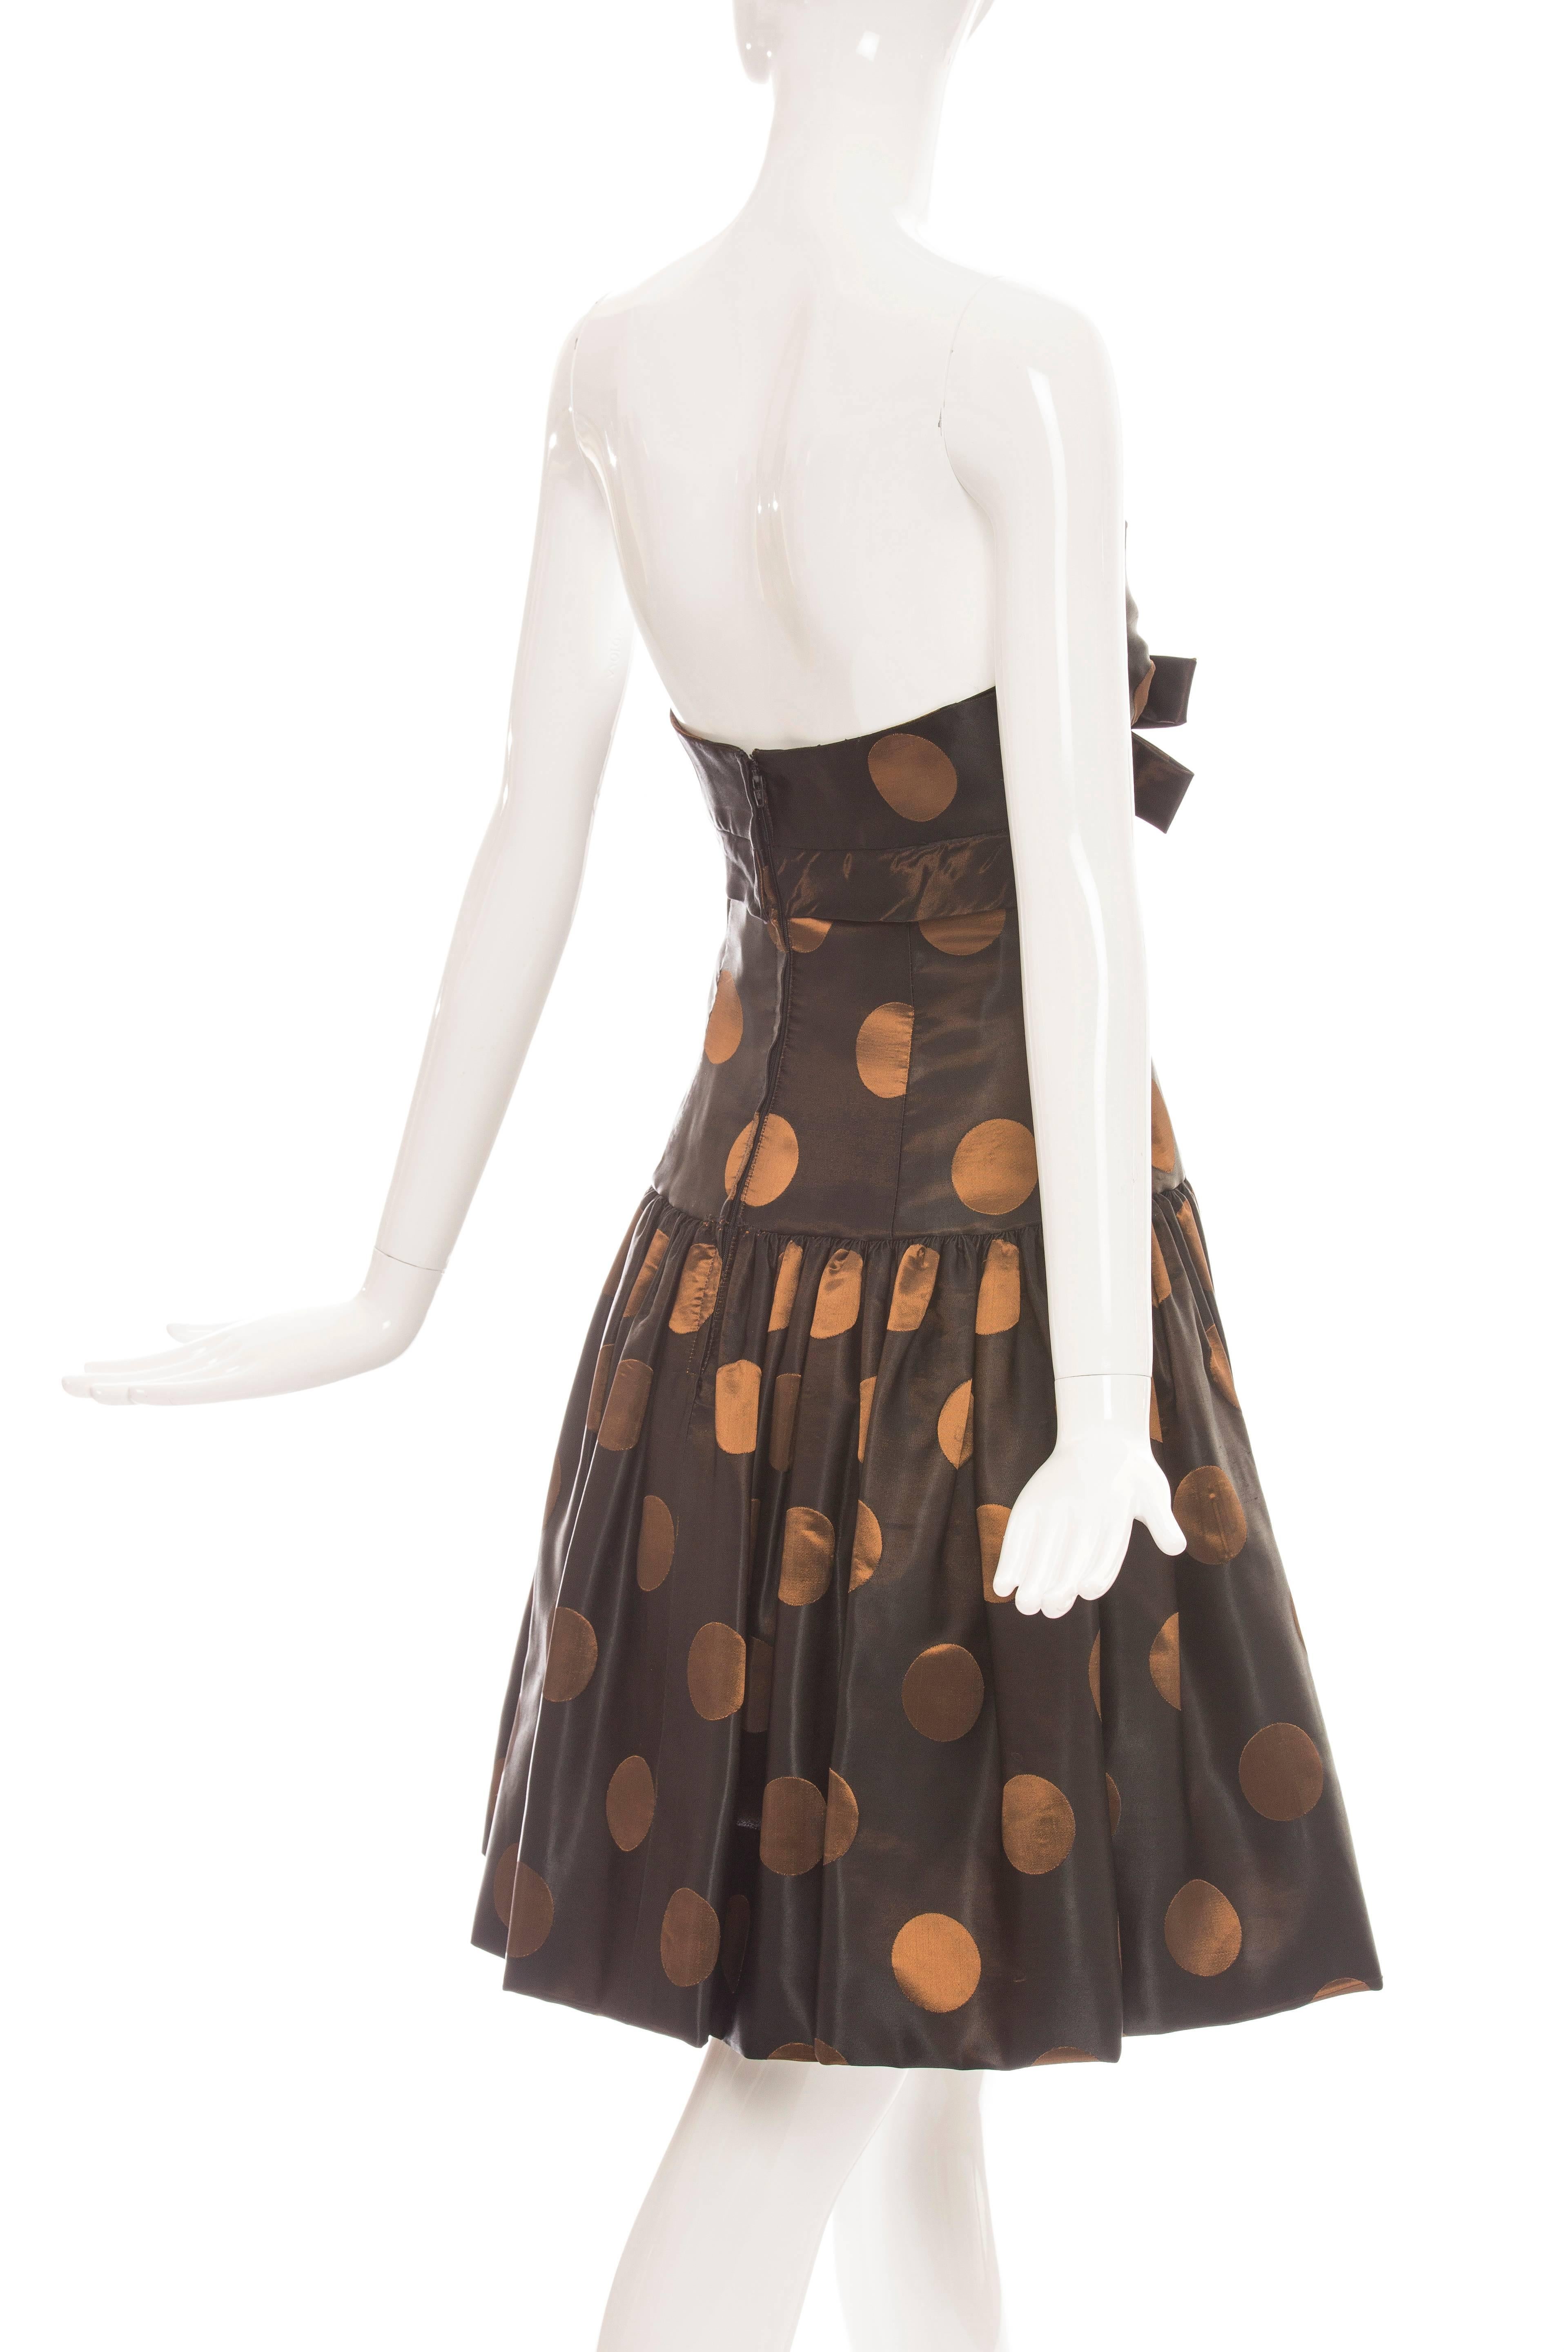 Victor Costa Strapless Black Copper Polka Dot Taffeta Party Dress, Circa 1980's For Sale 3